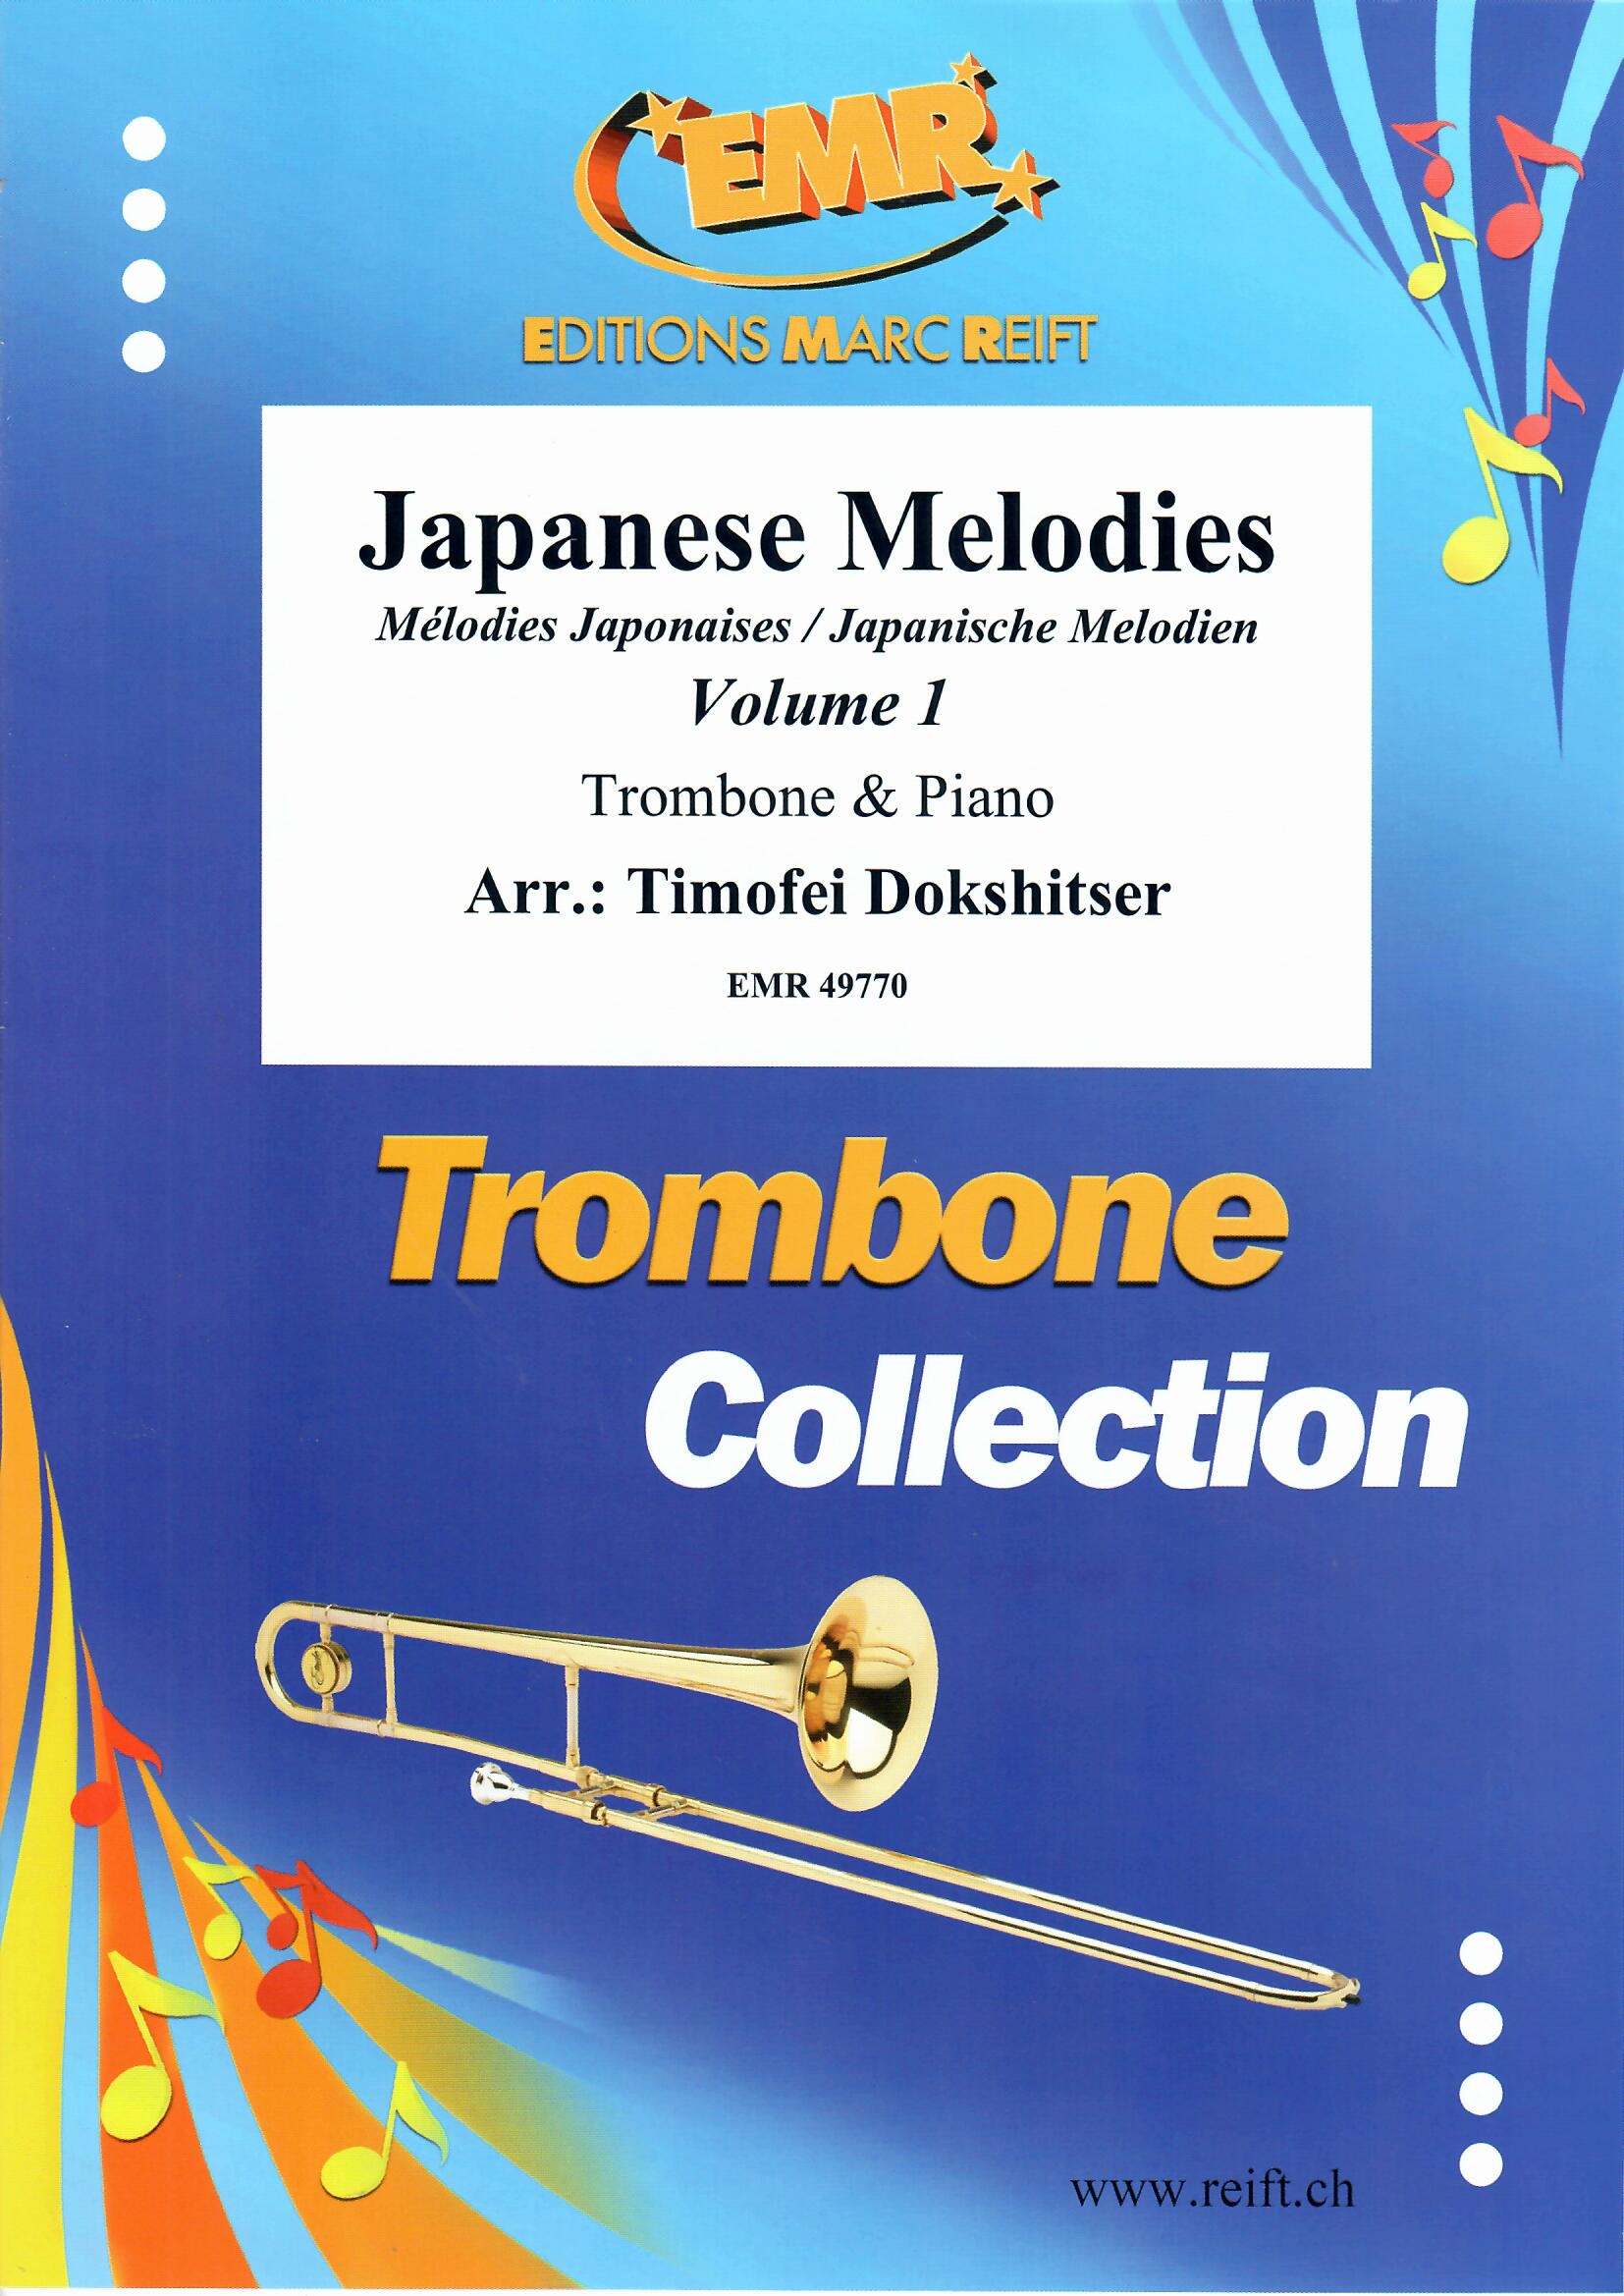 JAPANESE MELODIES VOL. 1 - Trombone & Piano, SOLOS - Trombone